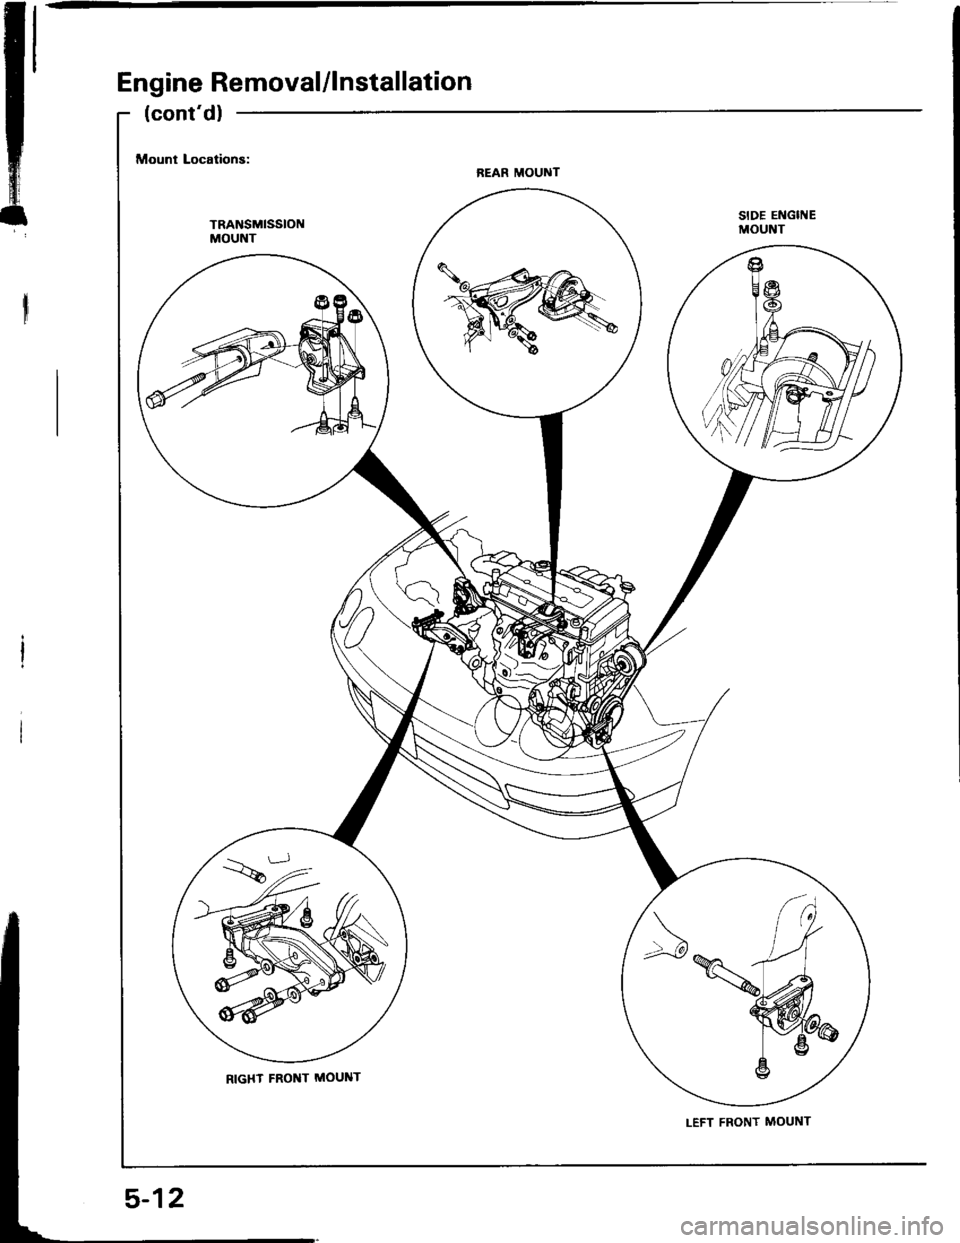 ACURA INTEGRA 1994  Service Repair Manual Engine Removal/lnstallation
SIDE ENGITIEMOUNT
5-12 